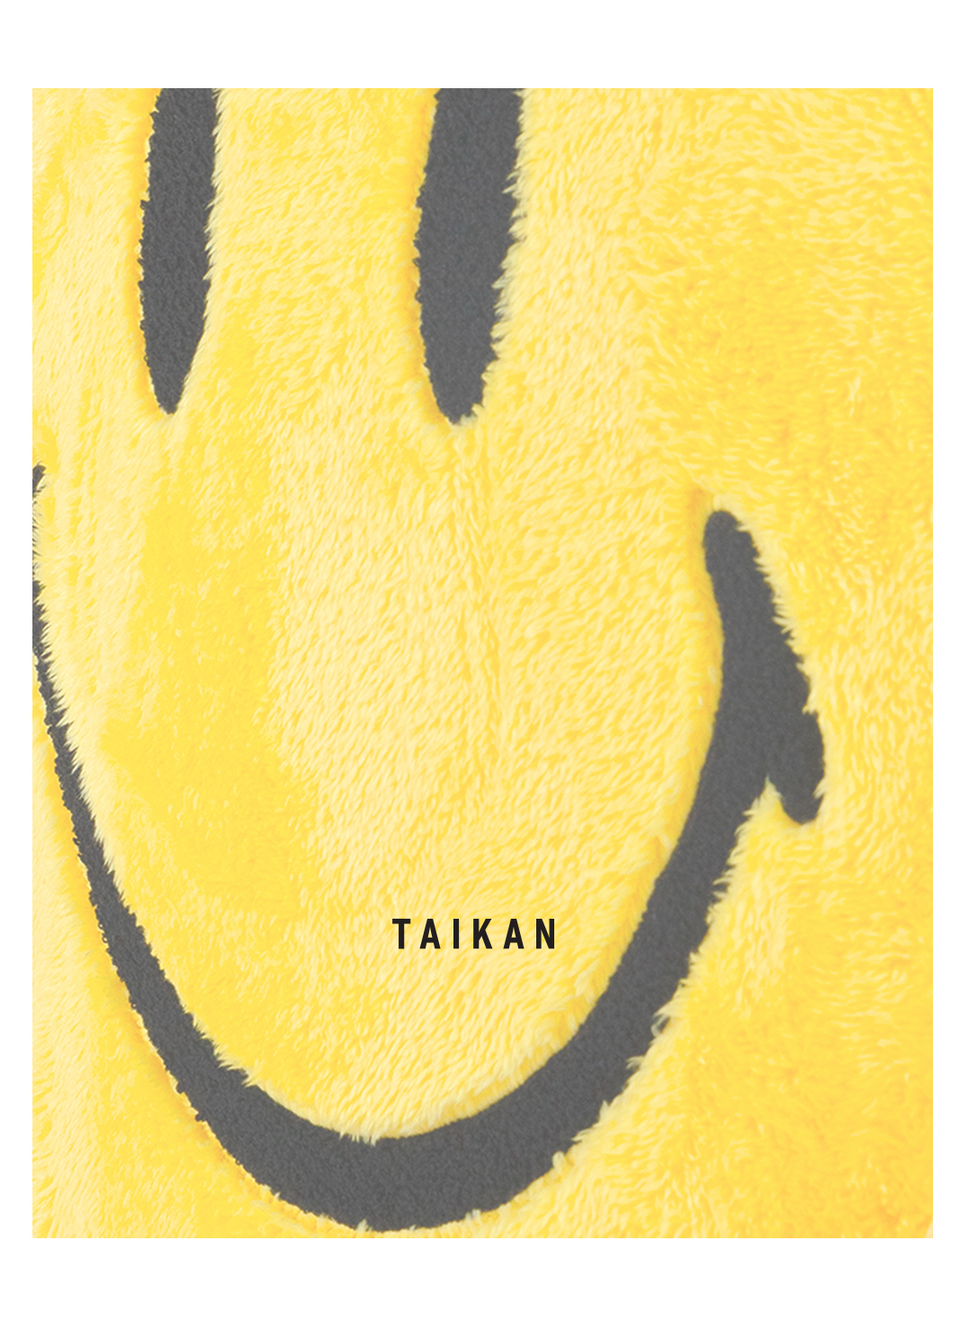 TAIKAN X MARKET SMILEY